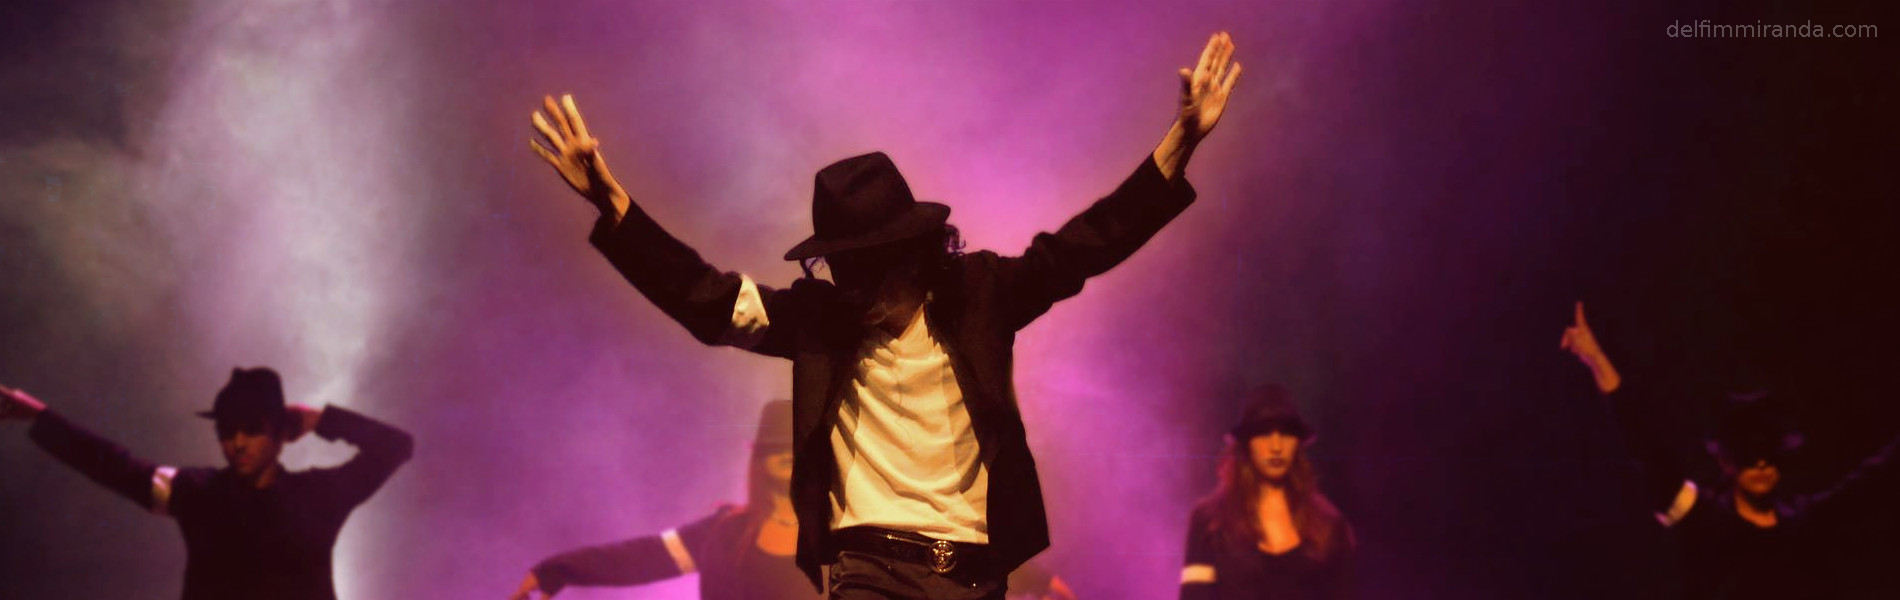 Delfim Miranda - Award Winning Michael Jackson Tribute Artist - Look Alike - Sound Alike - Impersonator Singing and Dancing Like the King of Pop